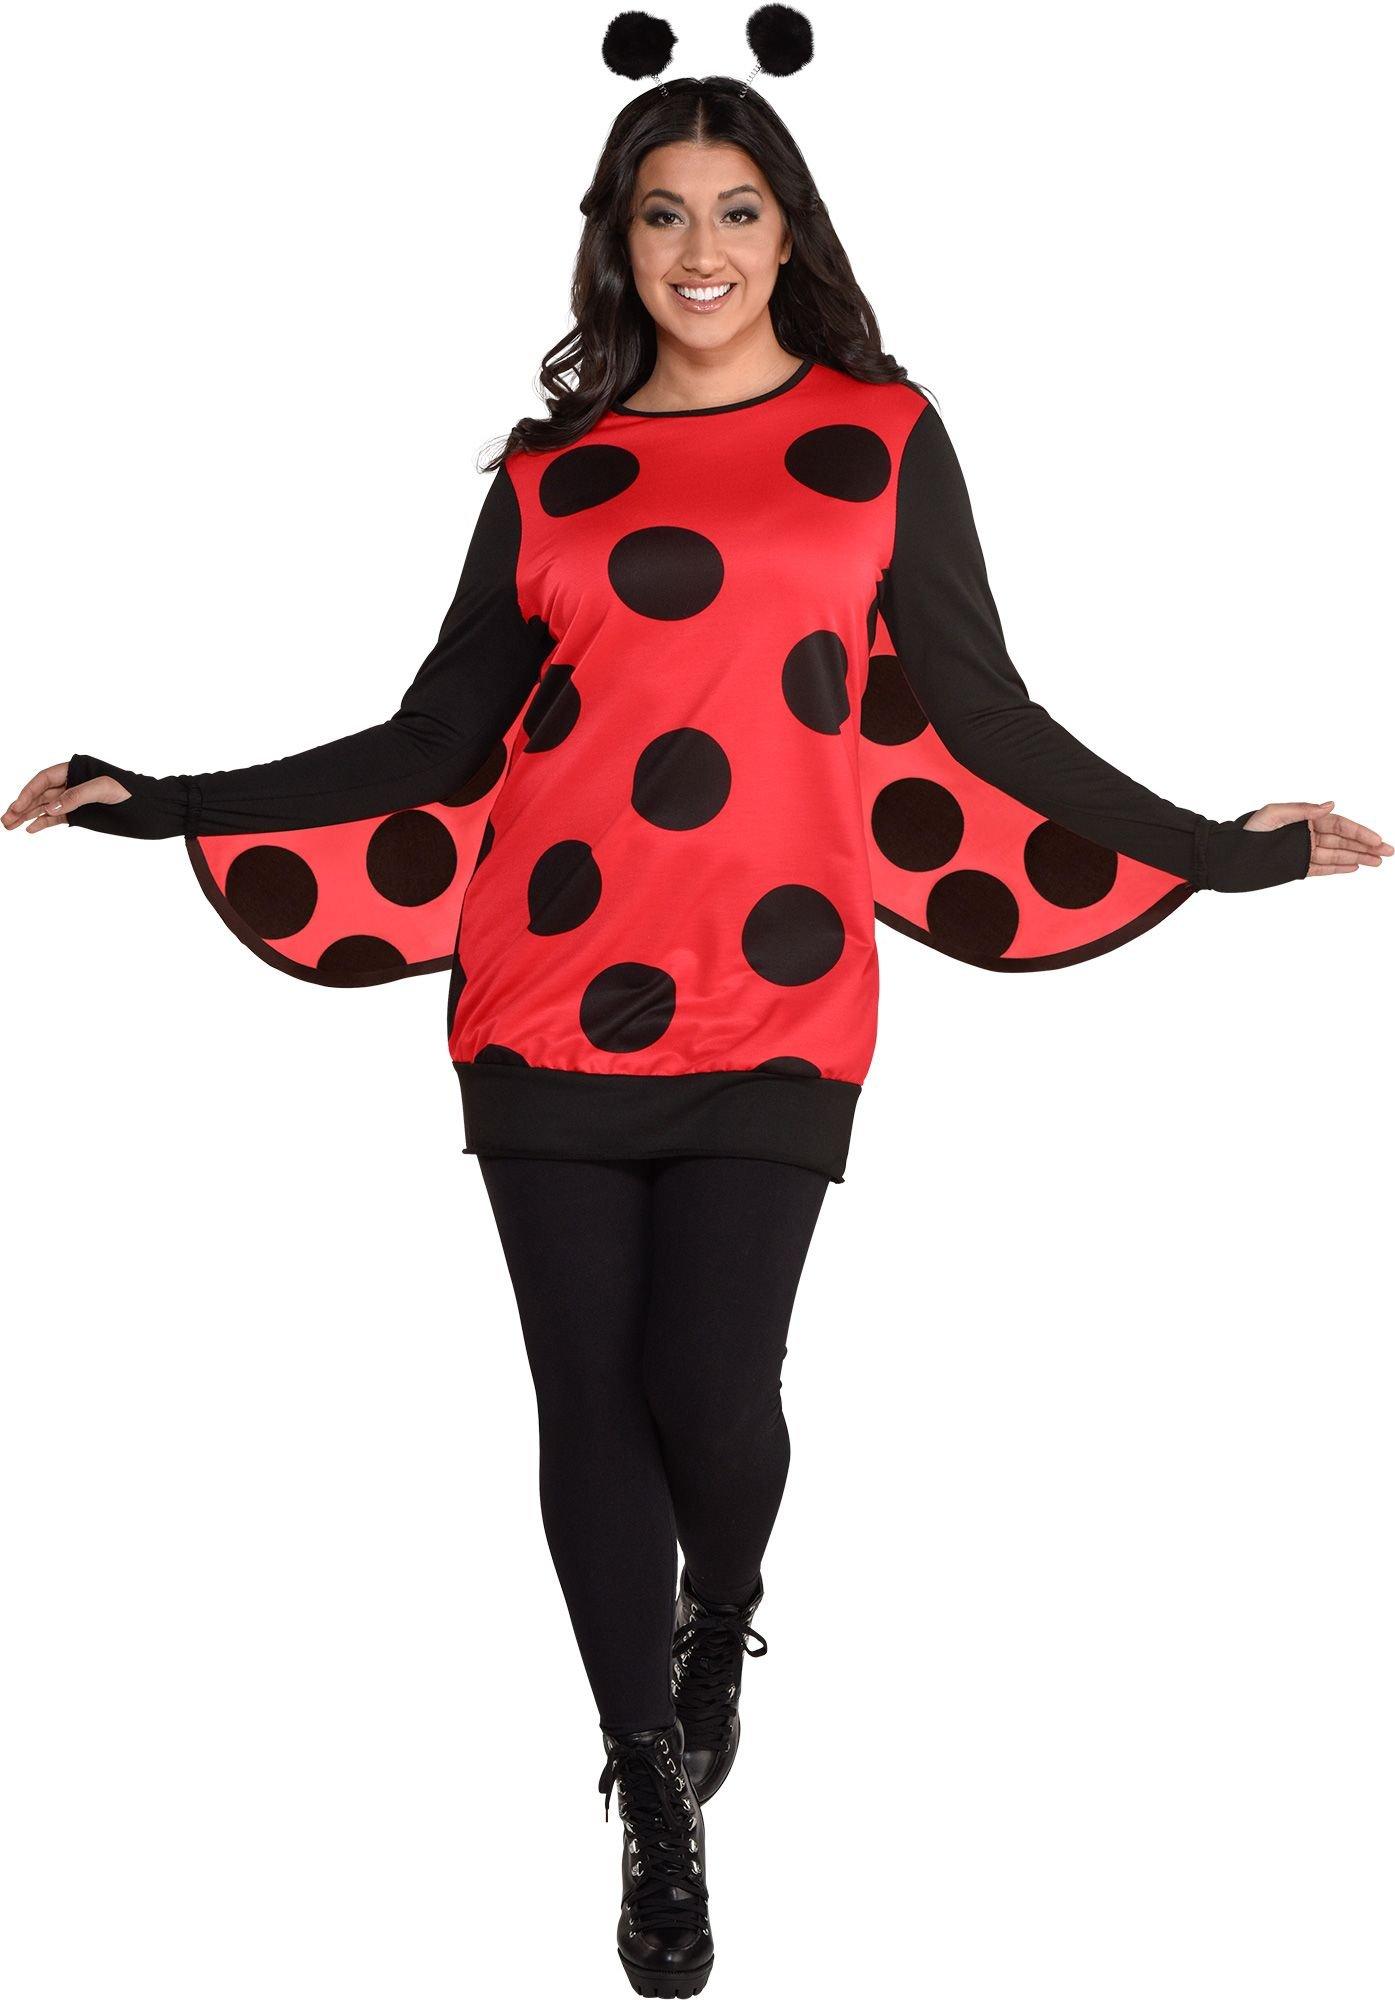 Adult Miraculous Ladybug Halloween Costume, More Options Available